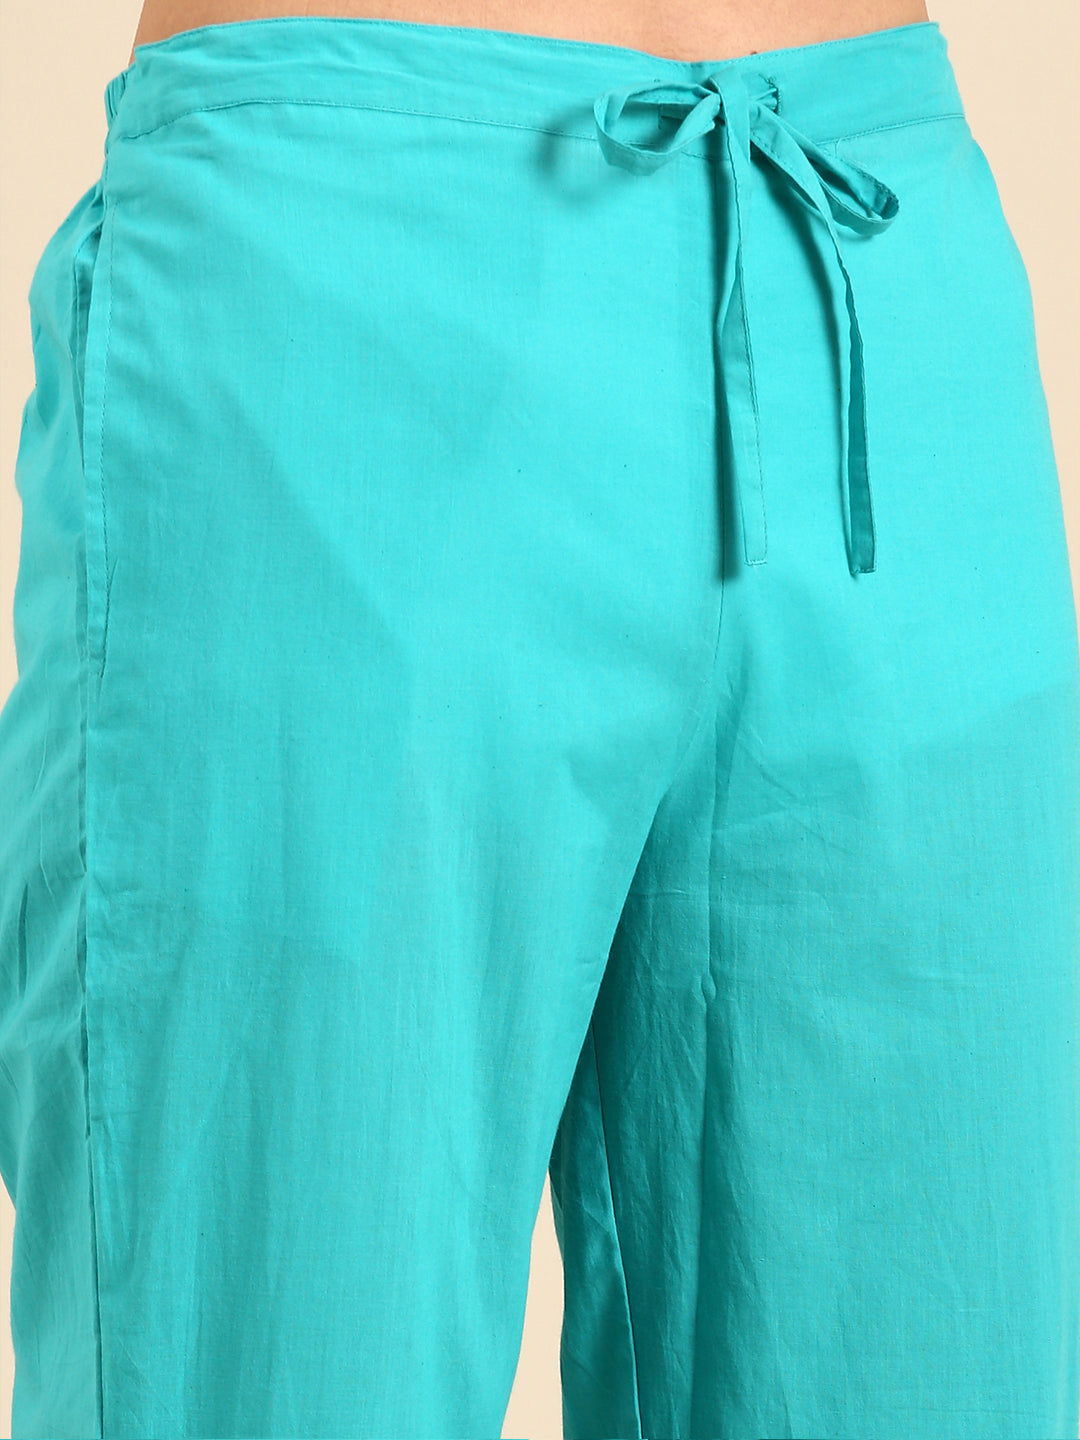 Women's Turquoise Blue Tie Dye Kurta Set